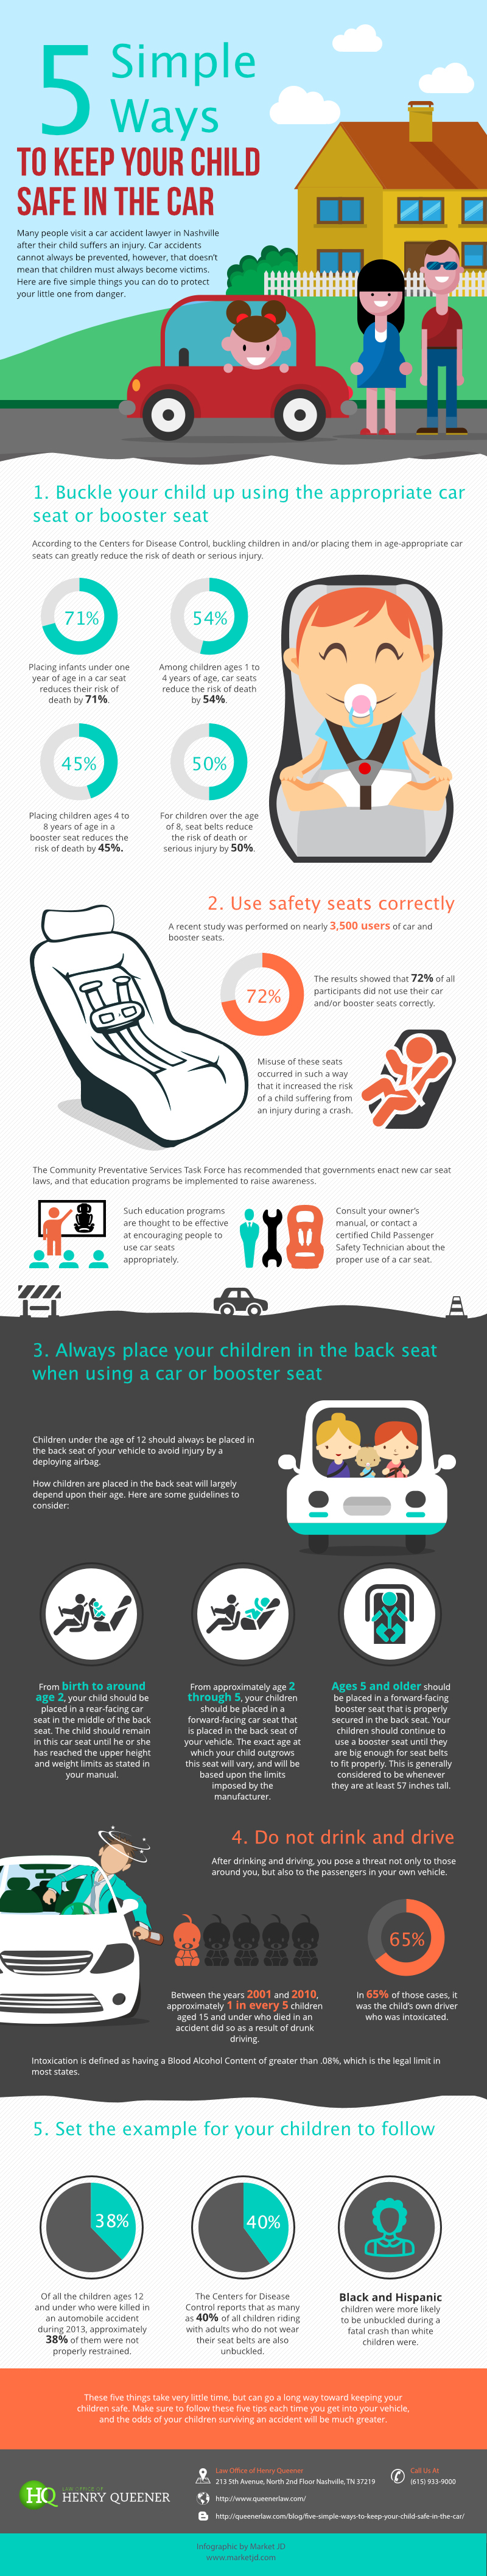 brochure 5 ways to keep child safe in car Queener Law